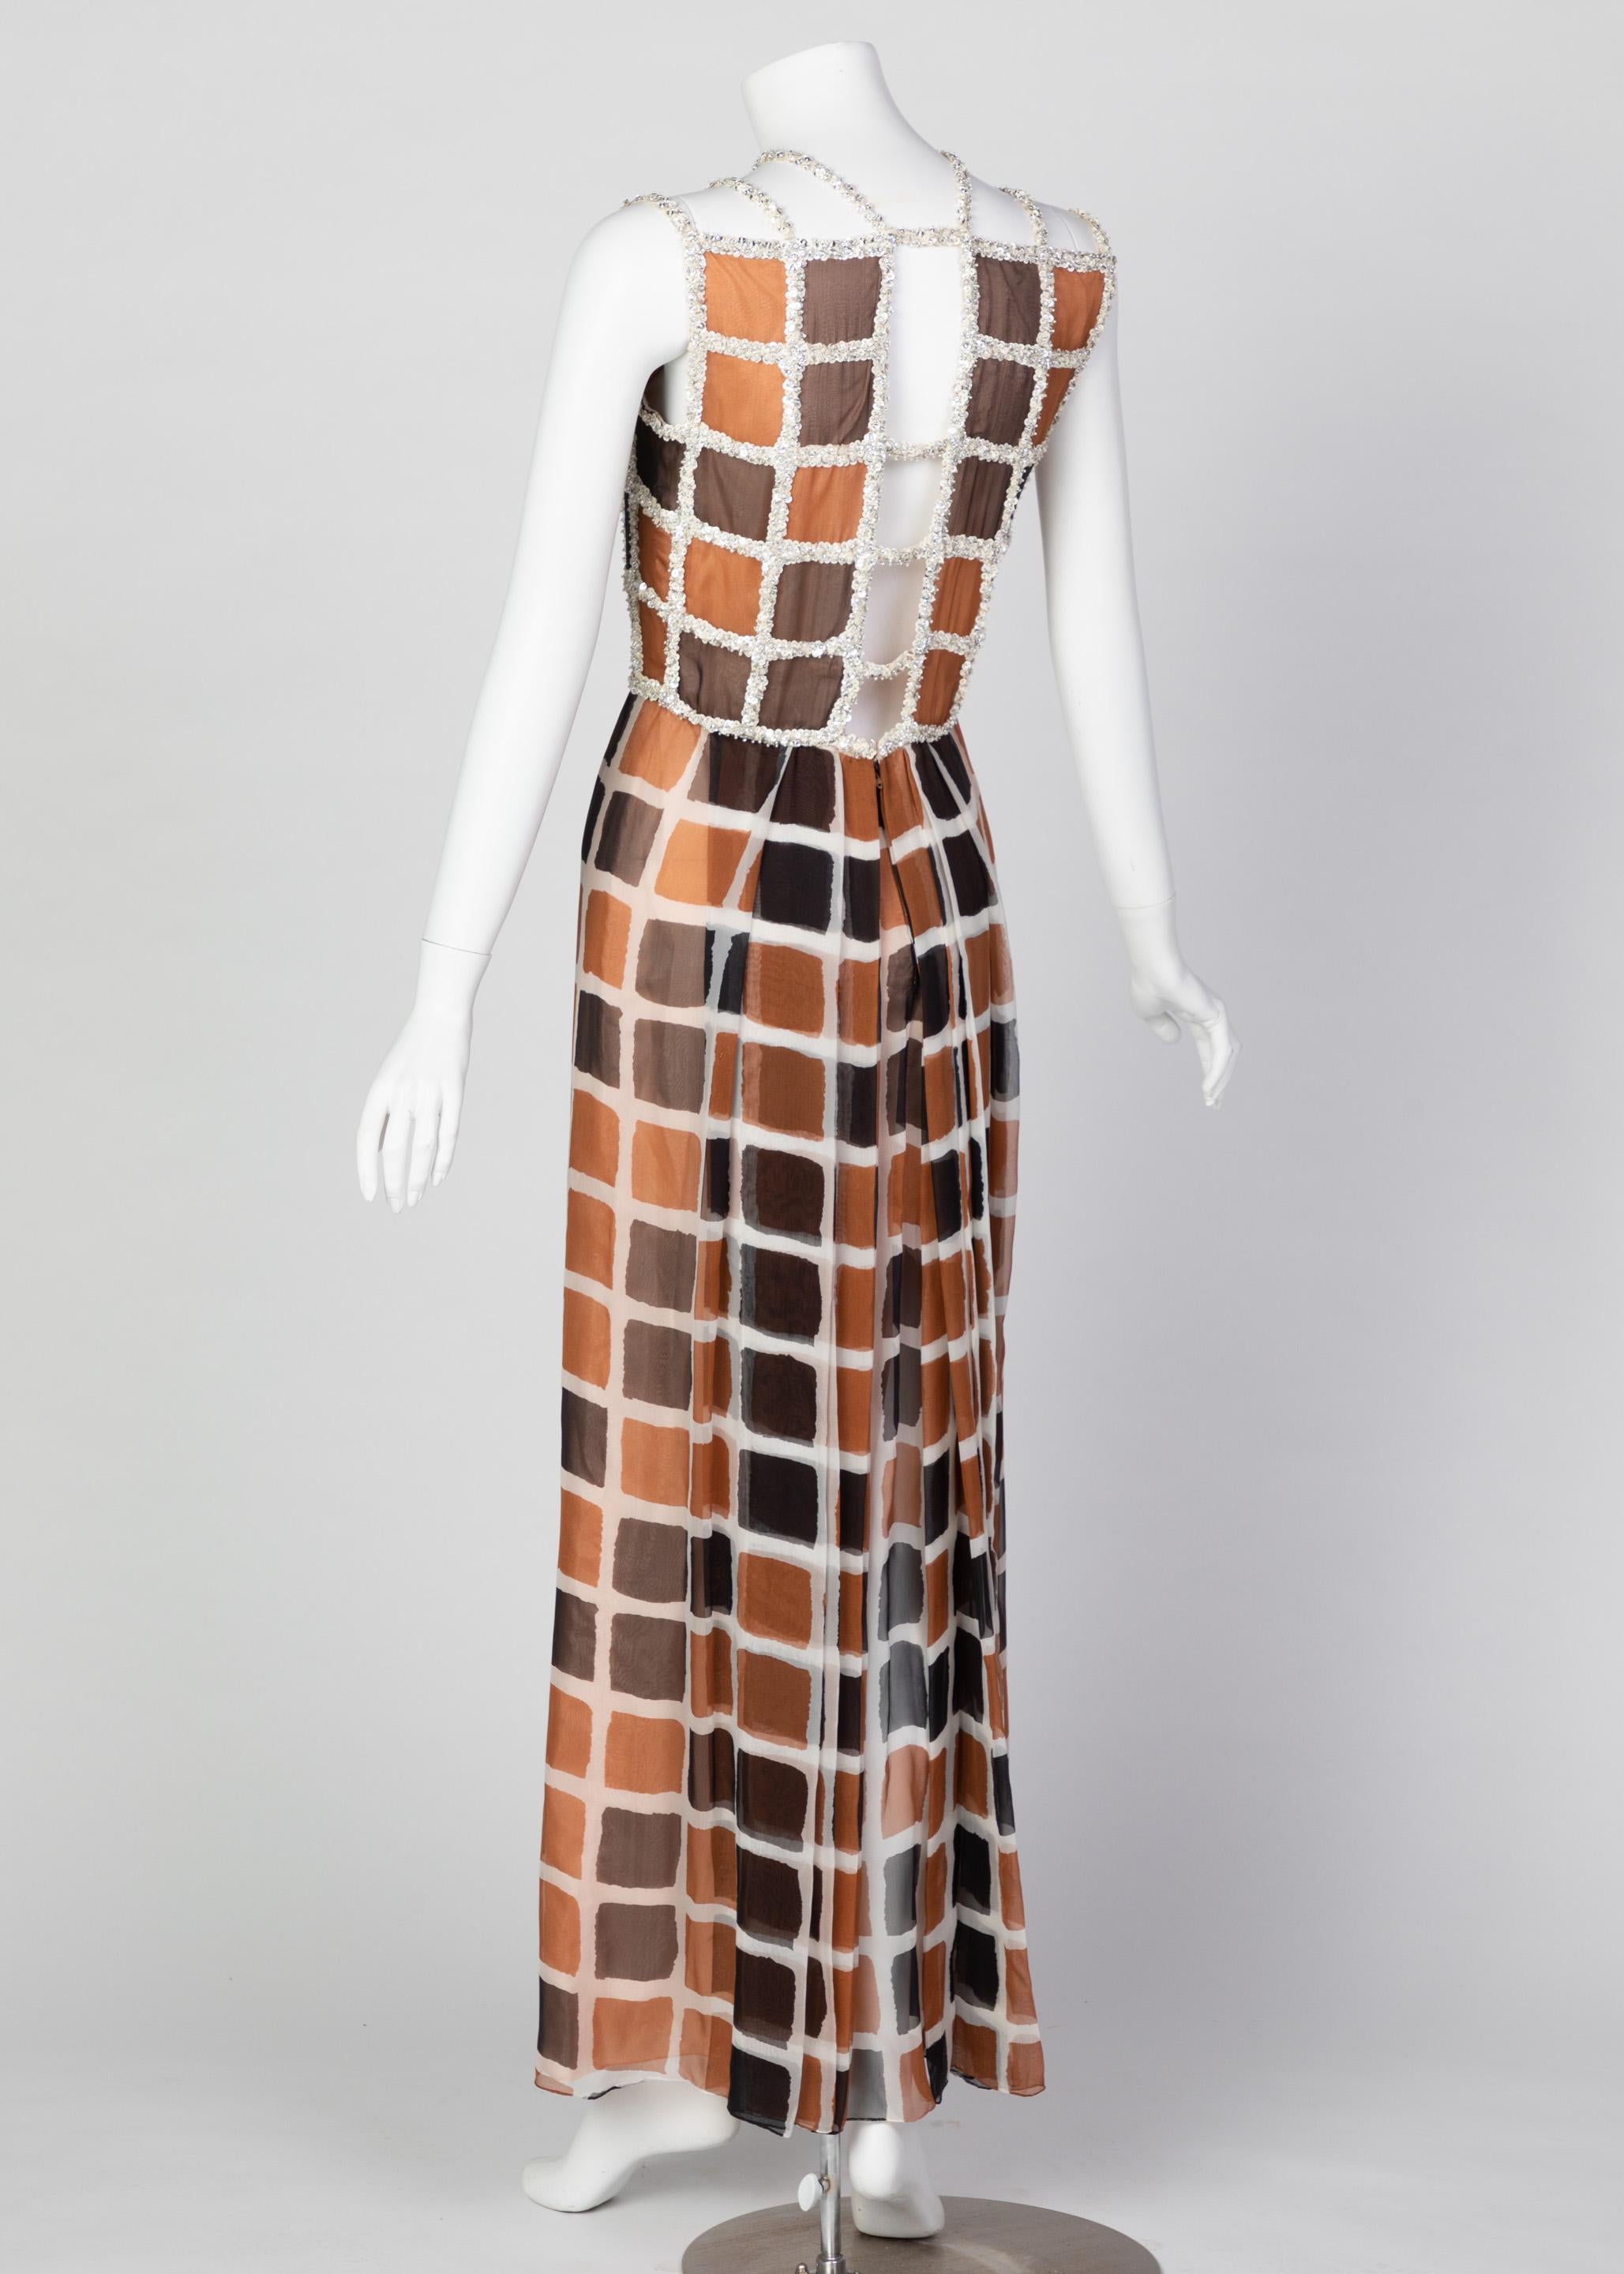 Women's James Galanos Couture Chiffon Dress with Sequins Lattice Straps, 1980s